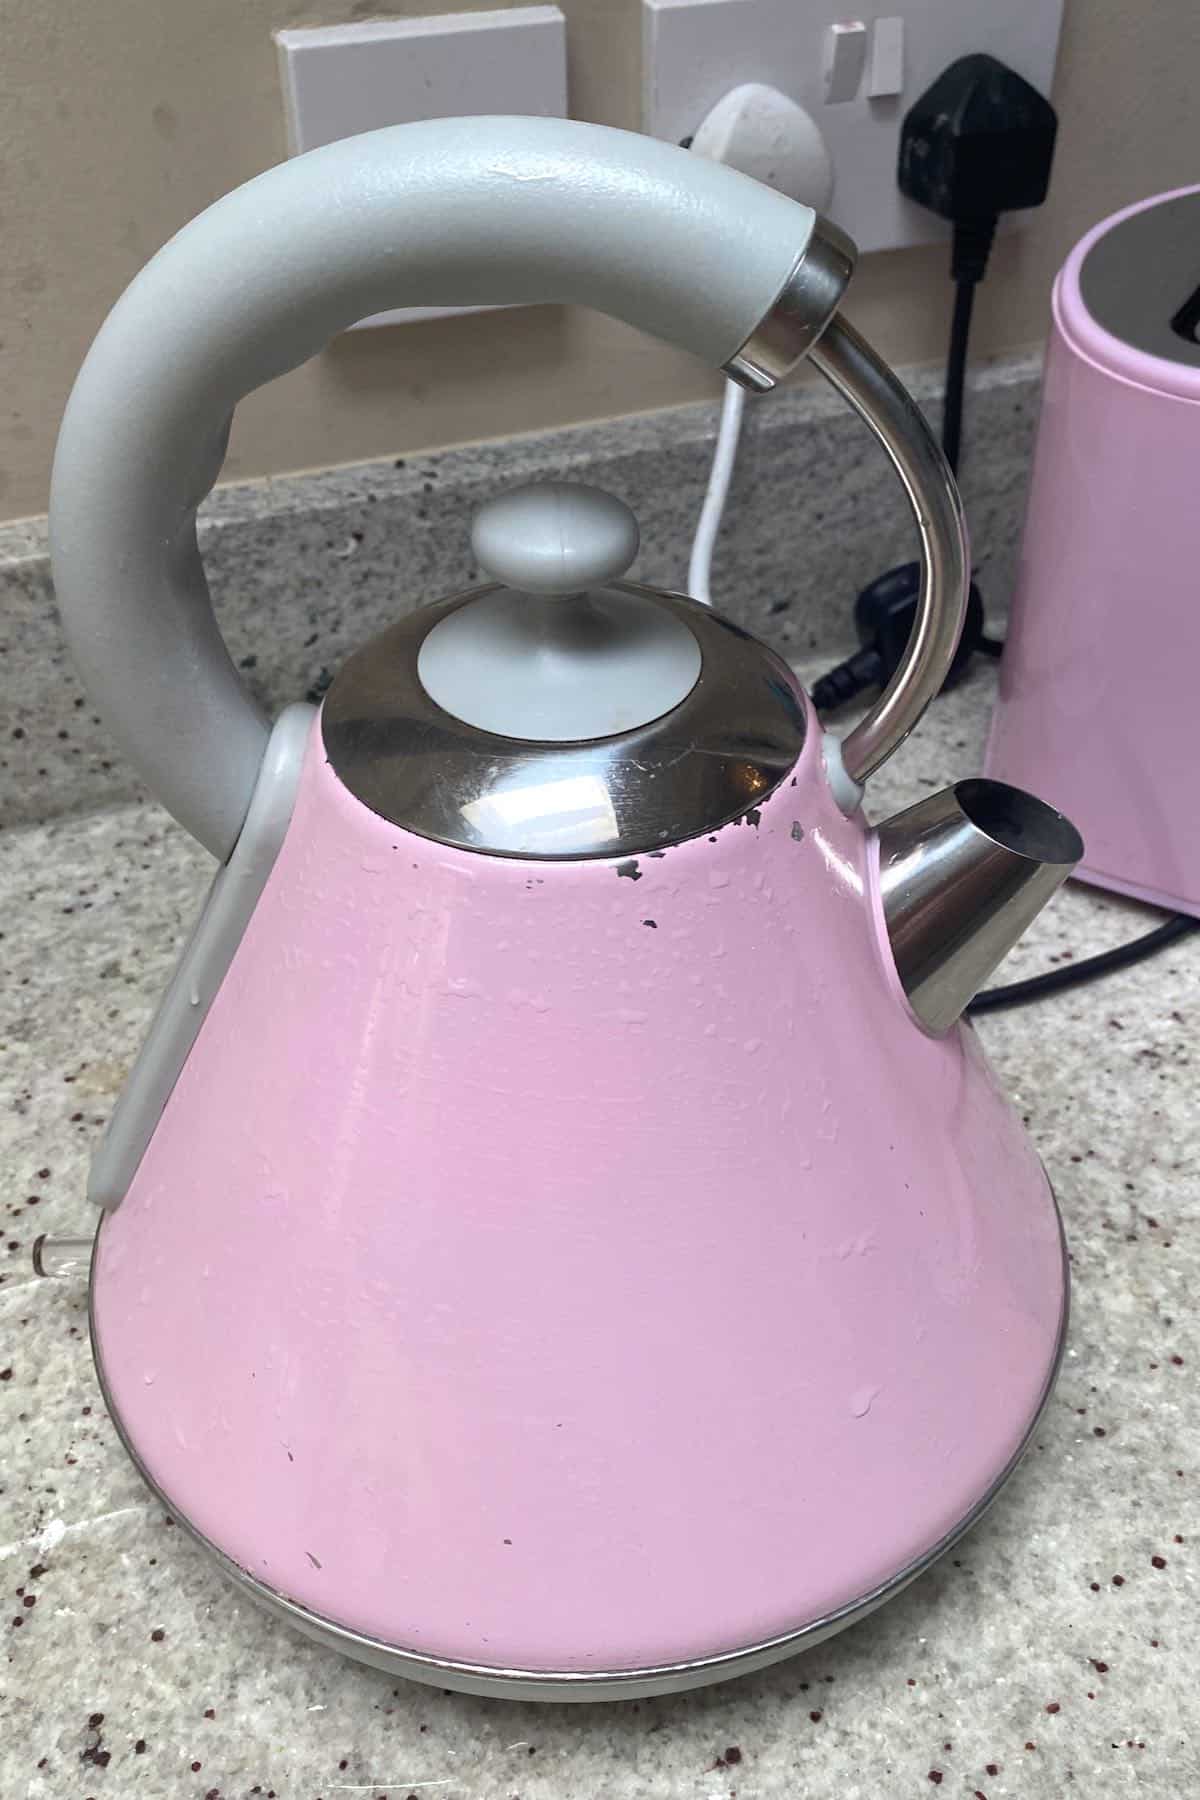 Boiling water in a kettle